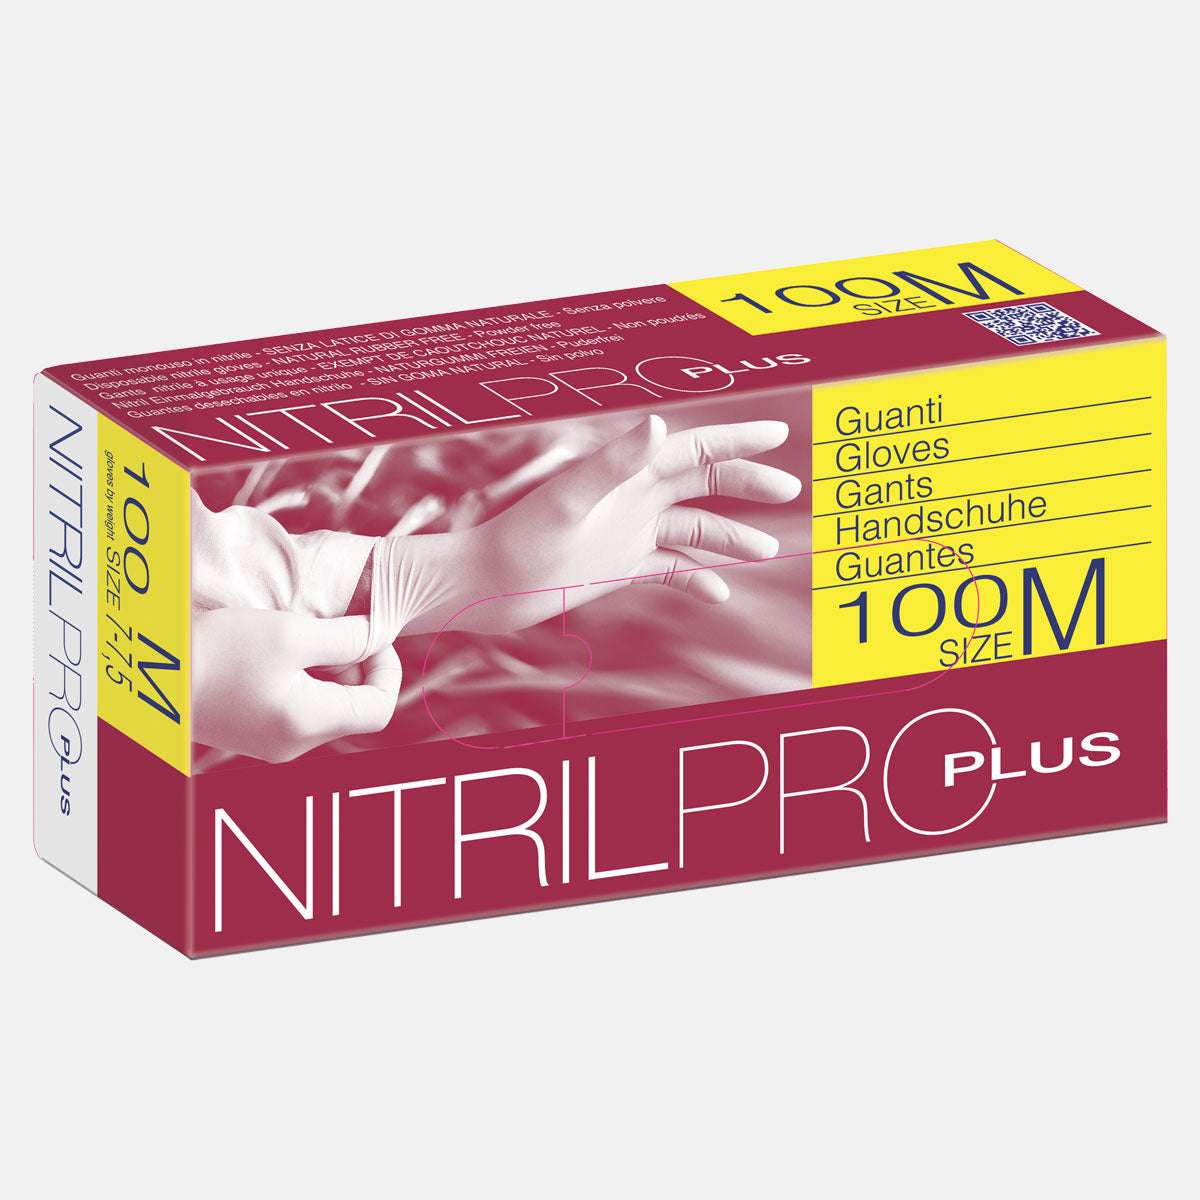 Professional nitrile disposable gloves Sizes S-M-L-XL pack 100pcs - Icoguant